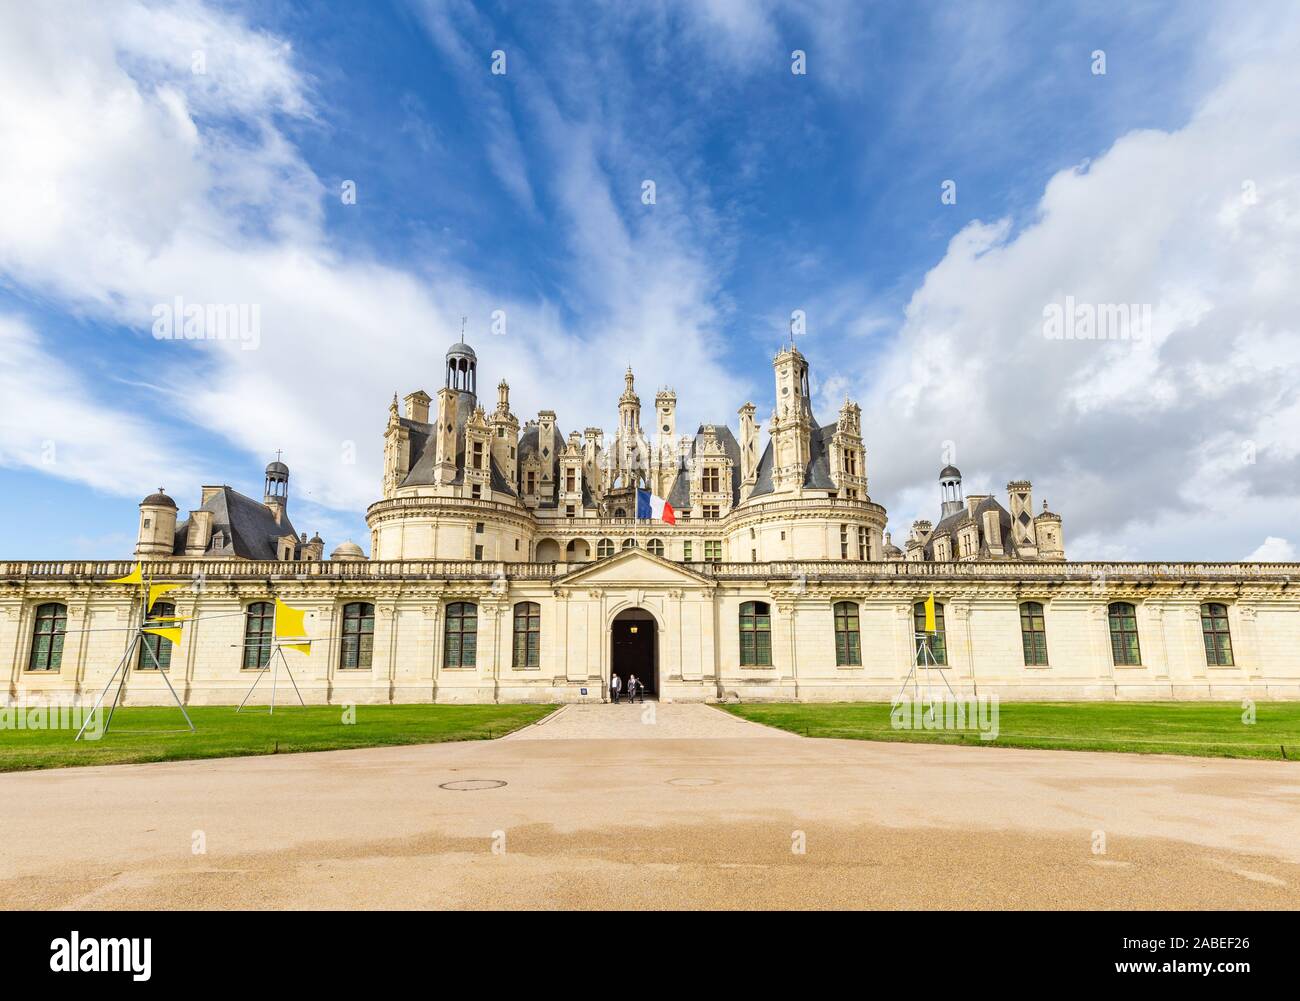 Eingang Chateau de Chambord im Loiretal, Zentrum Valle de Loire in Frankreich Stockfoto